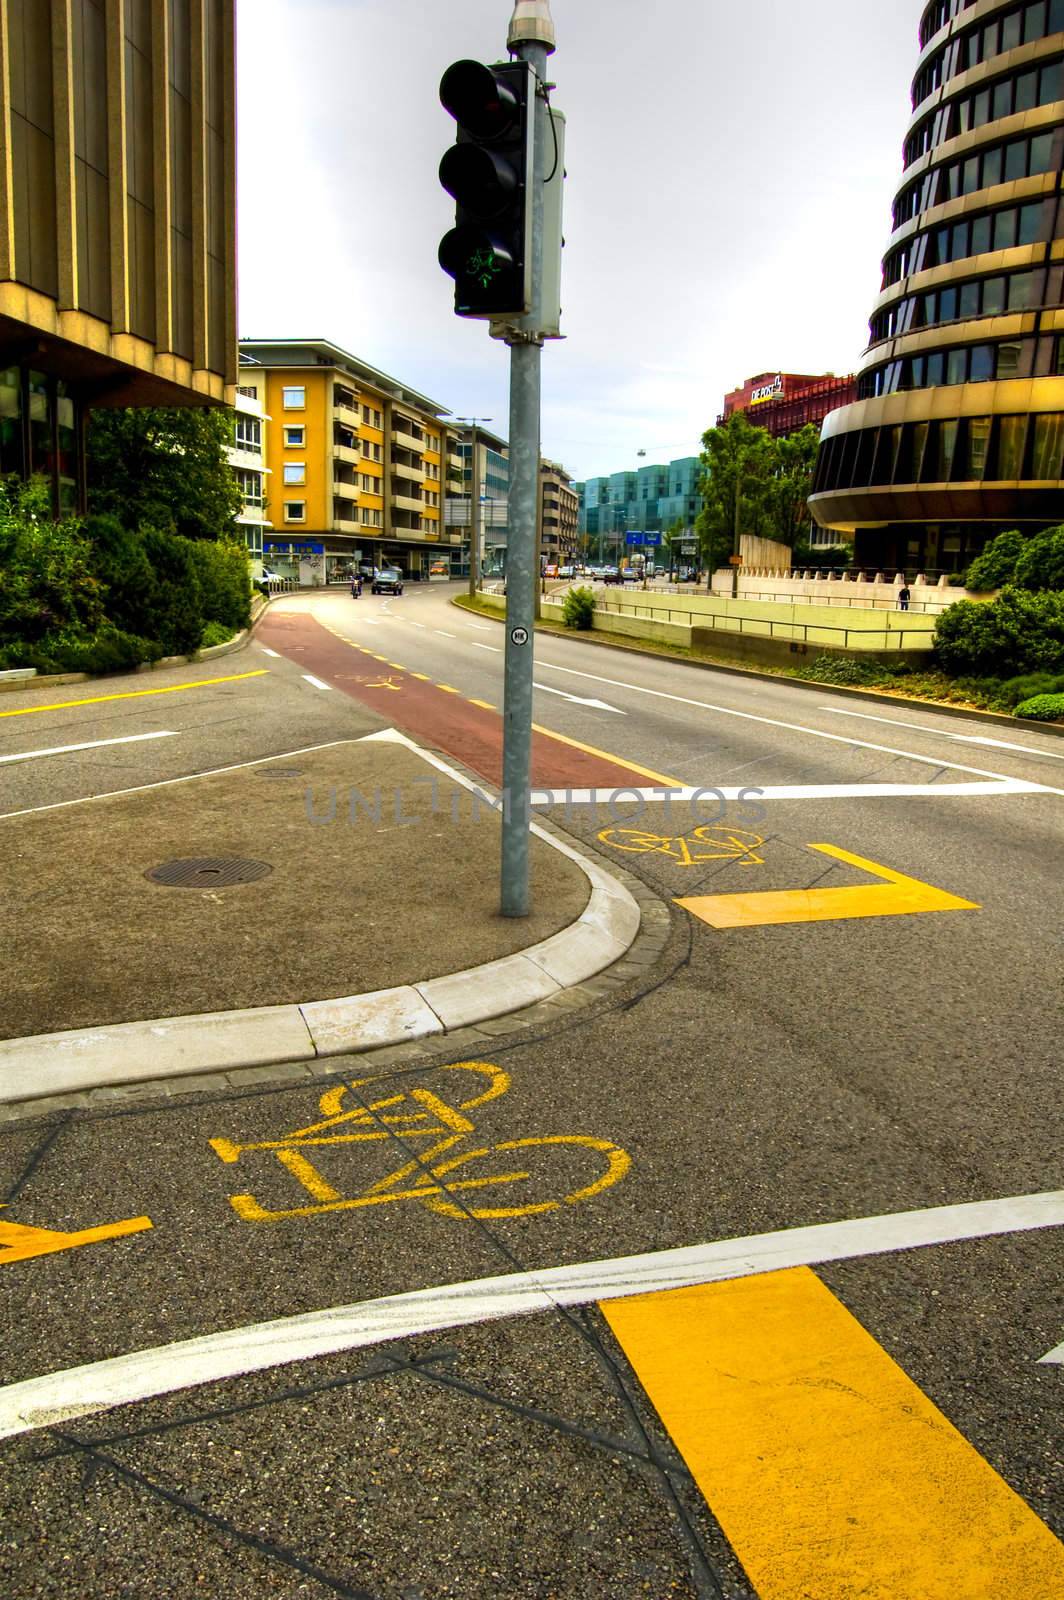 Bike lane by FernandoCortes